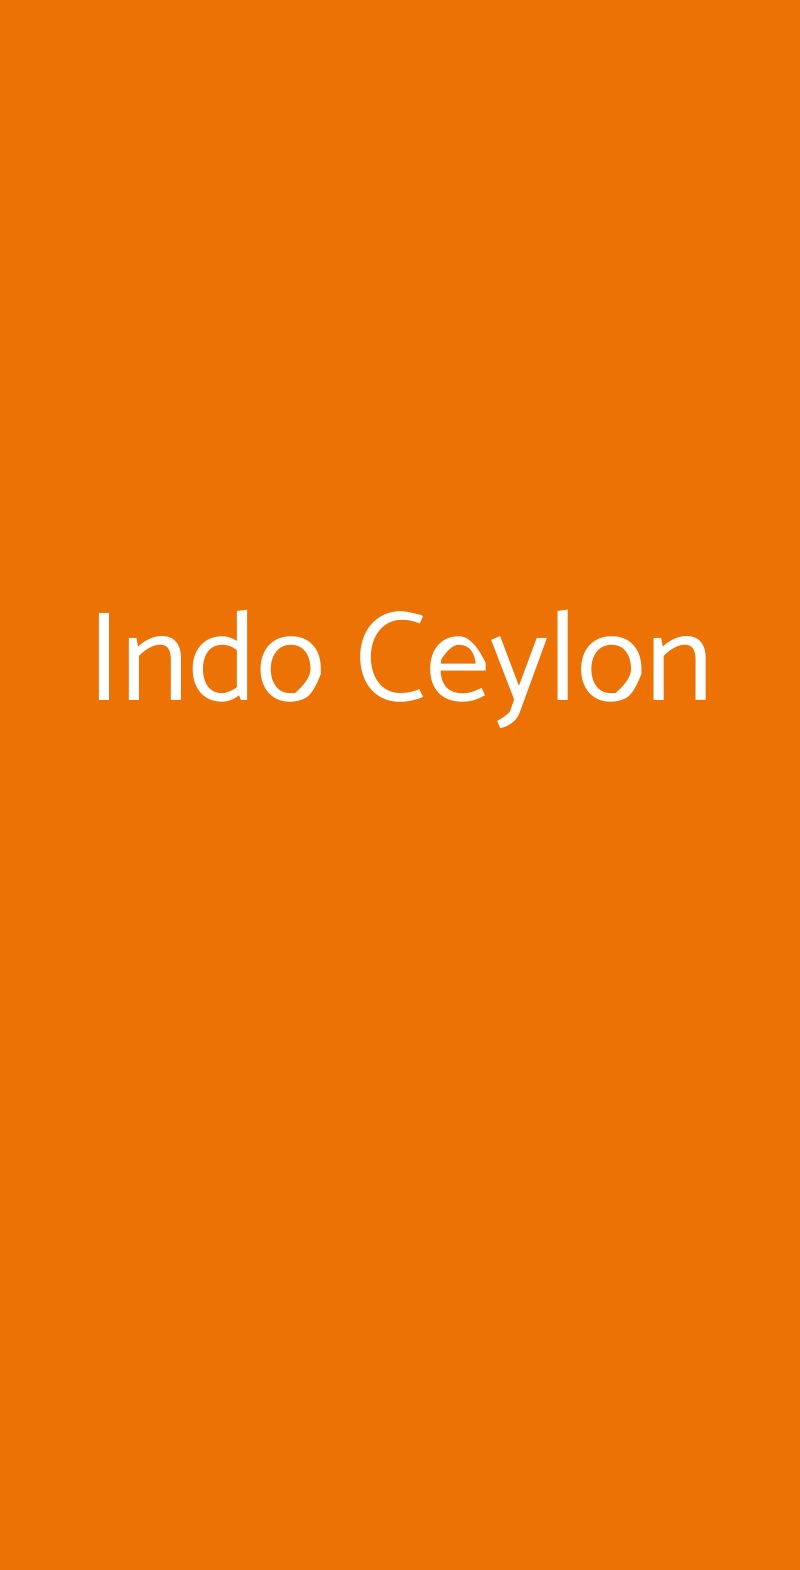 Indo Ceylon Milano menù 1 pagina